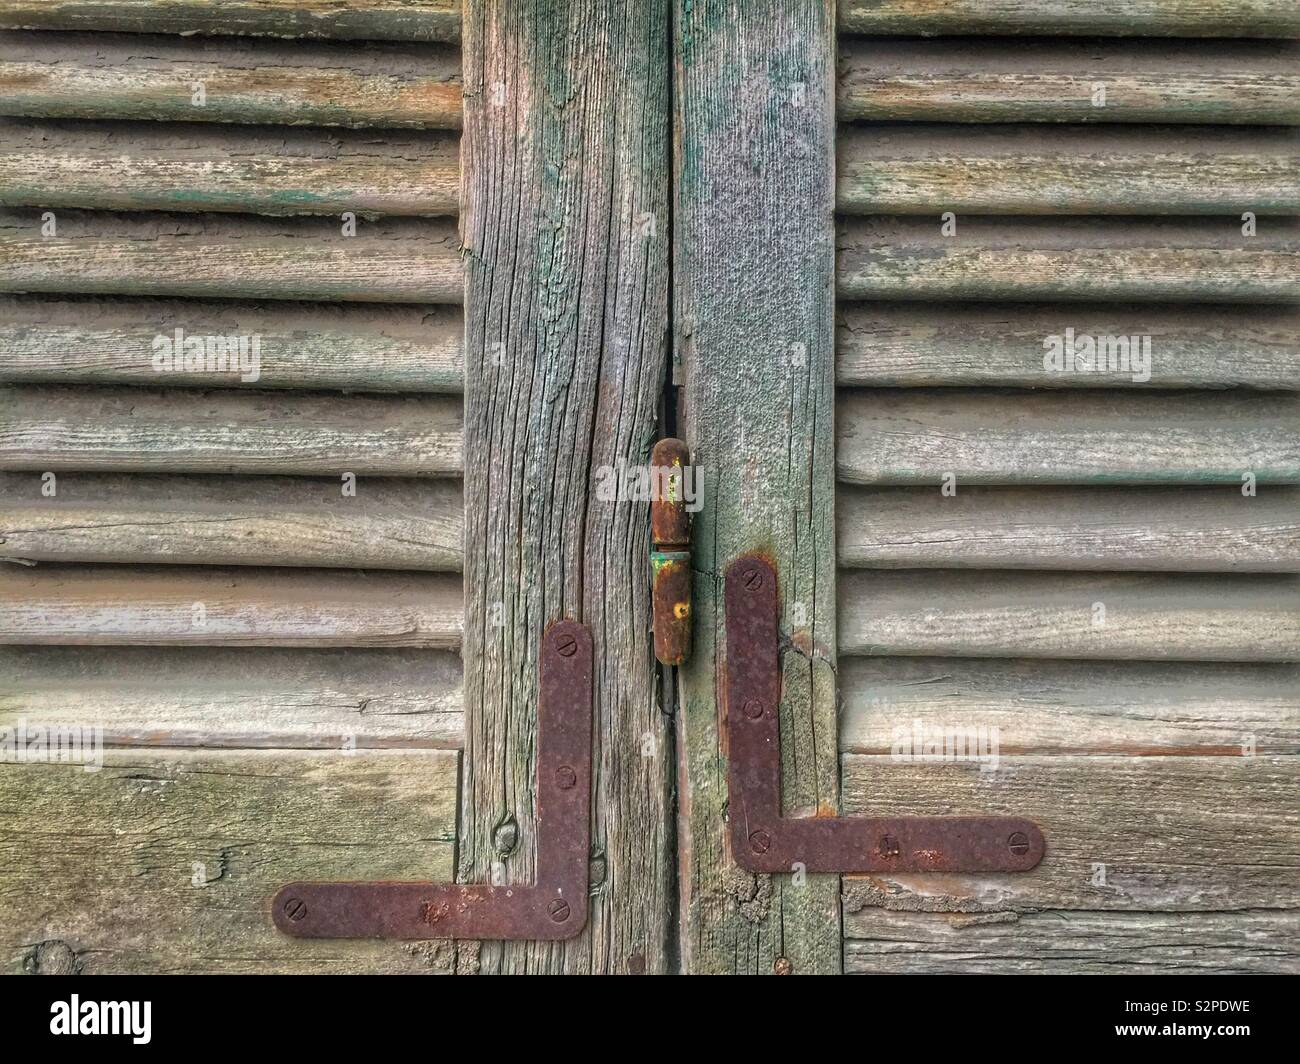 Old rusty hinge on wooden window shutters Stock Photo